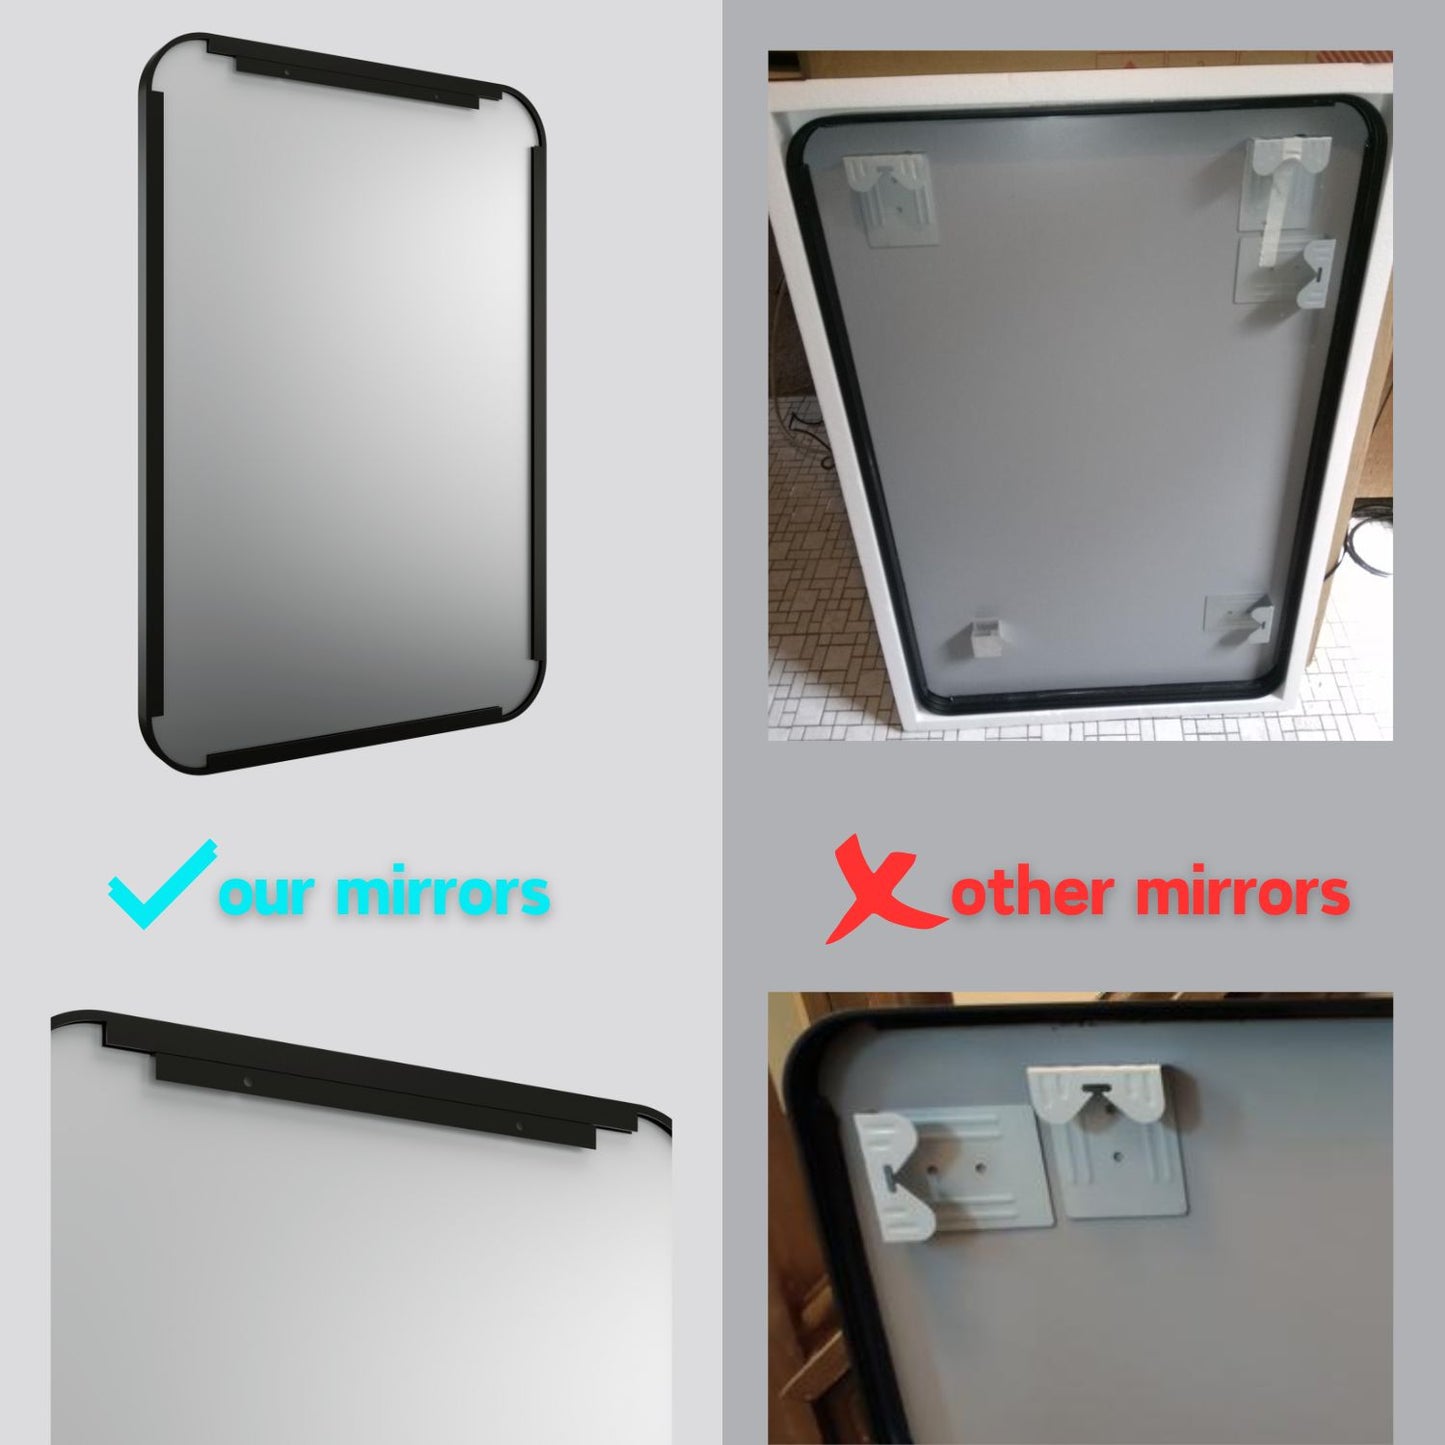 Waterpar® 40 in. W x 32 in. H Rectangular Aluminum Framed Wall Bathroom Vanity Mirror